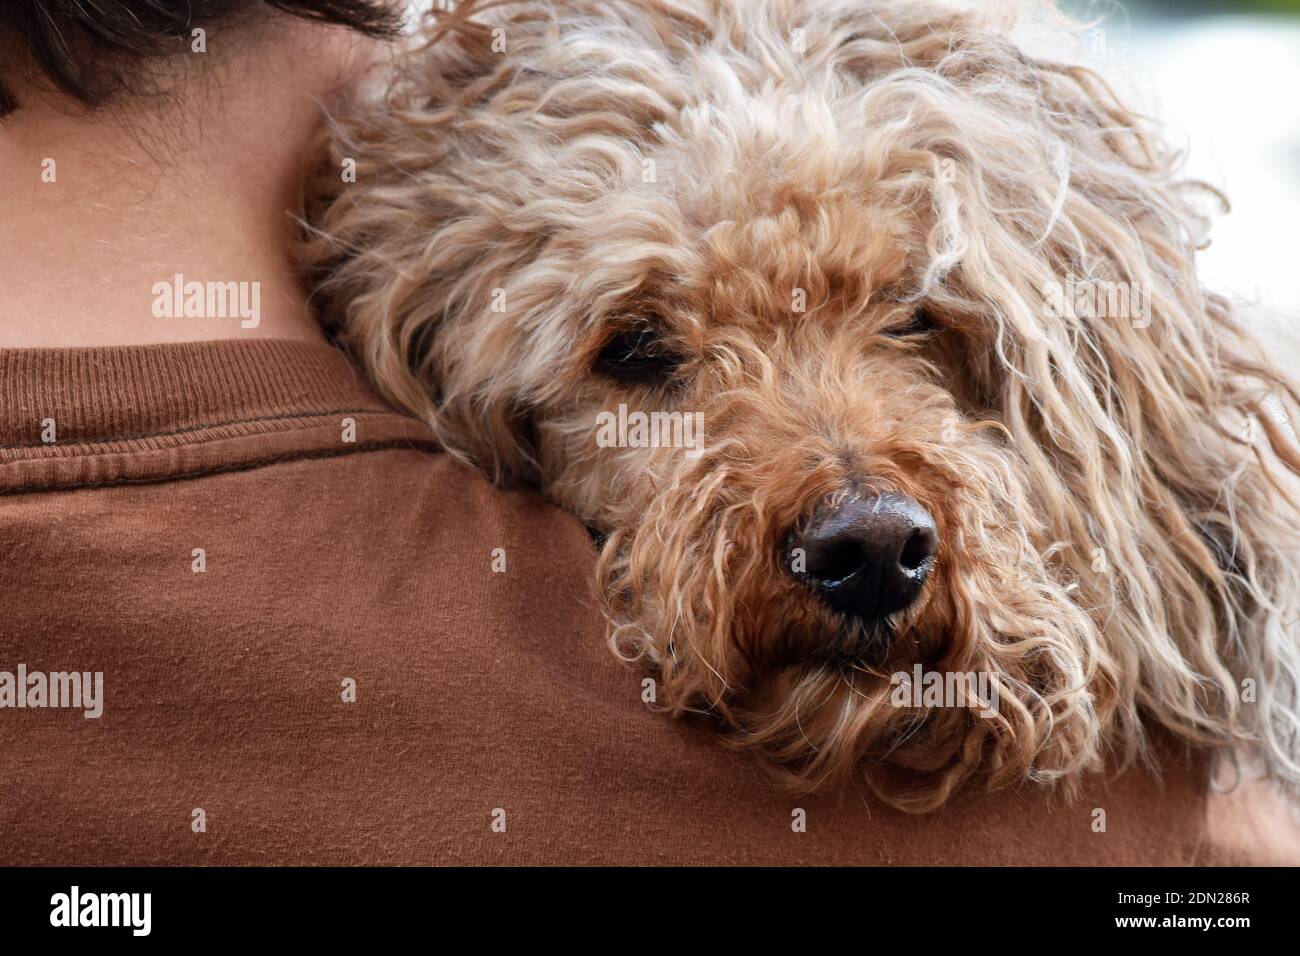 Dog's head on man's shoulder Stock Photo